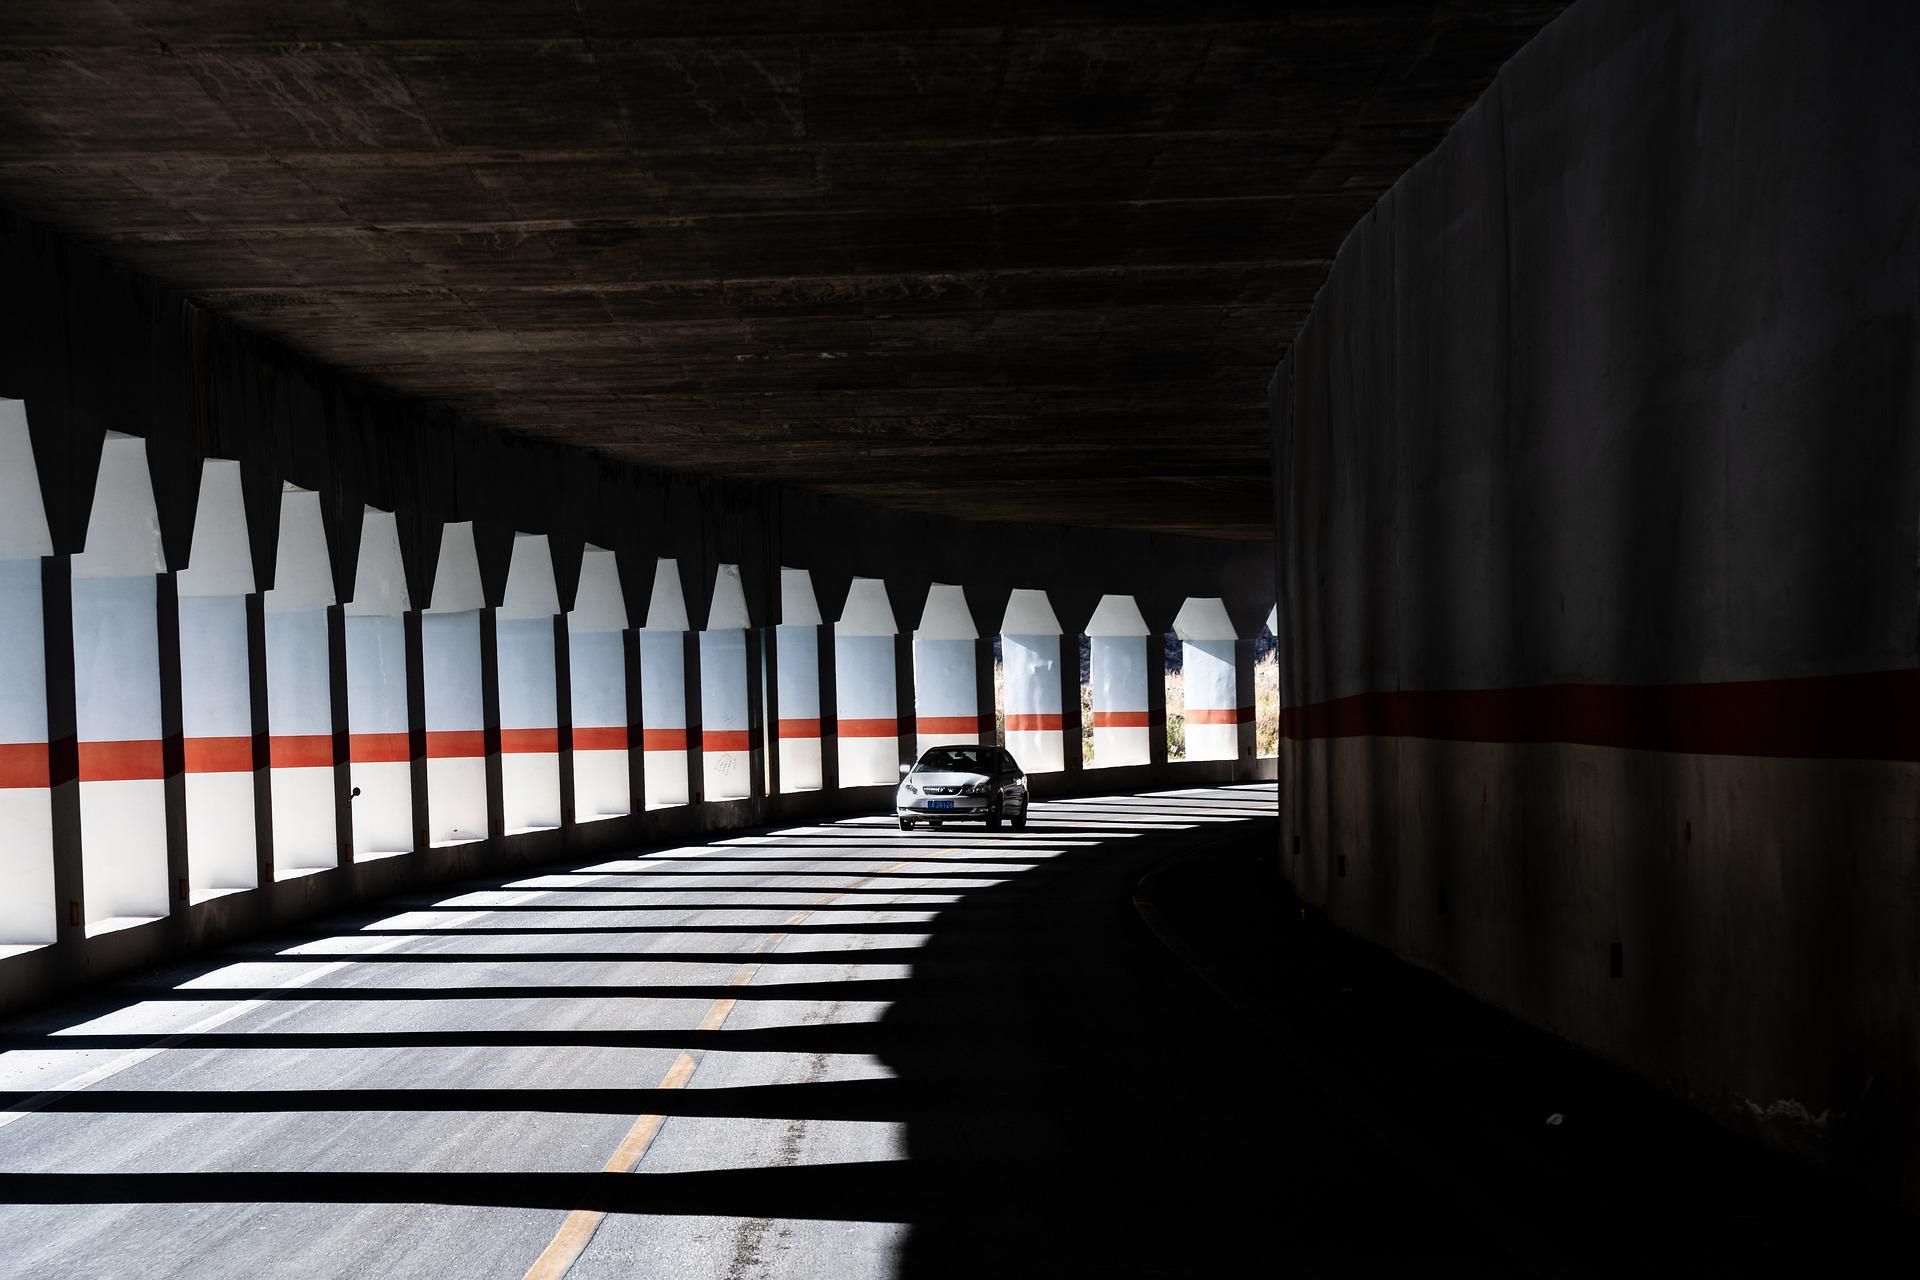 Car in a tunnel